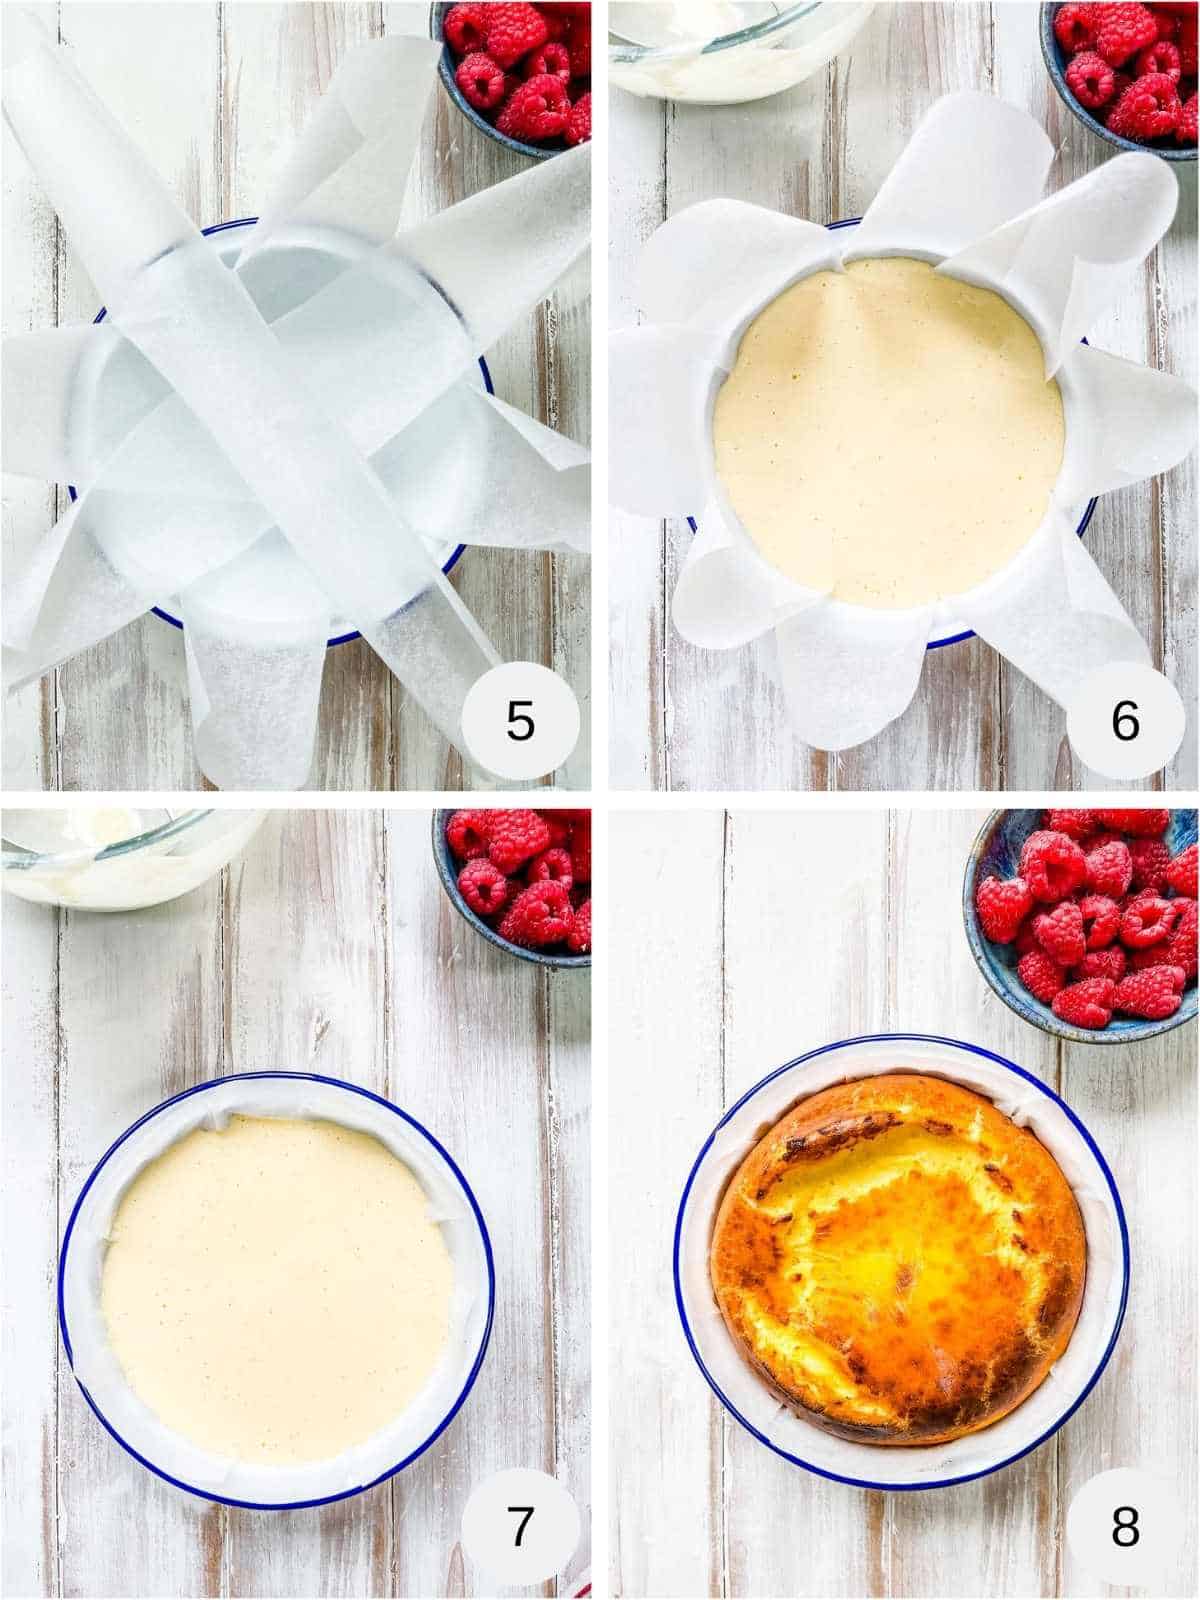 Photos showing the process of making a WW yogurt tart.